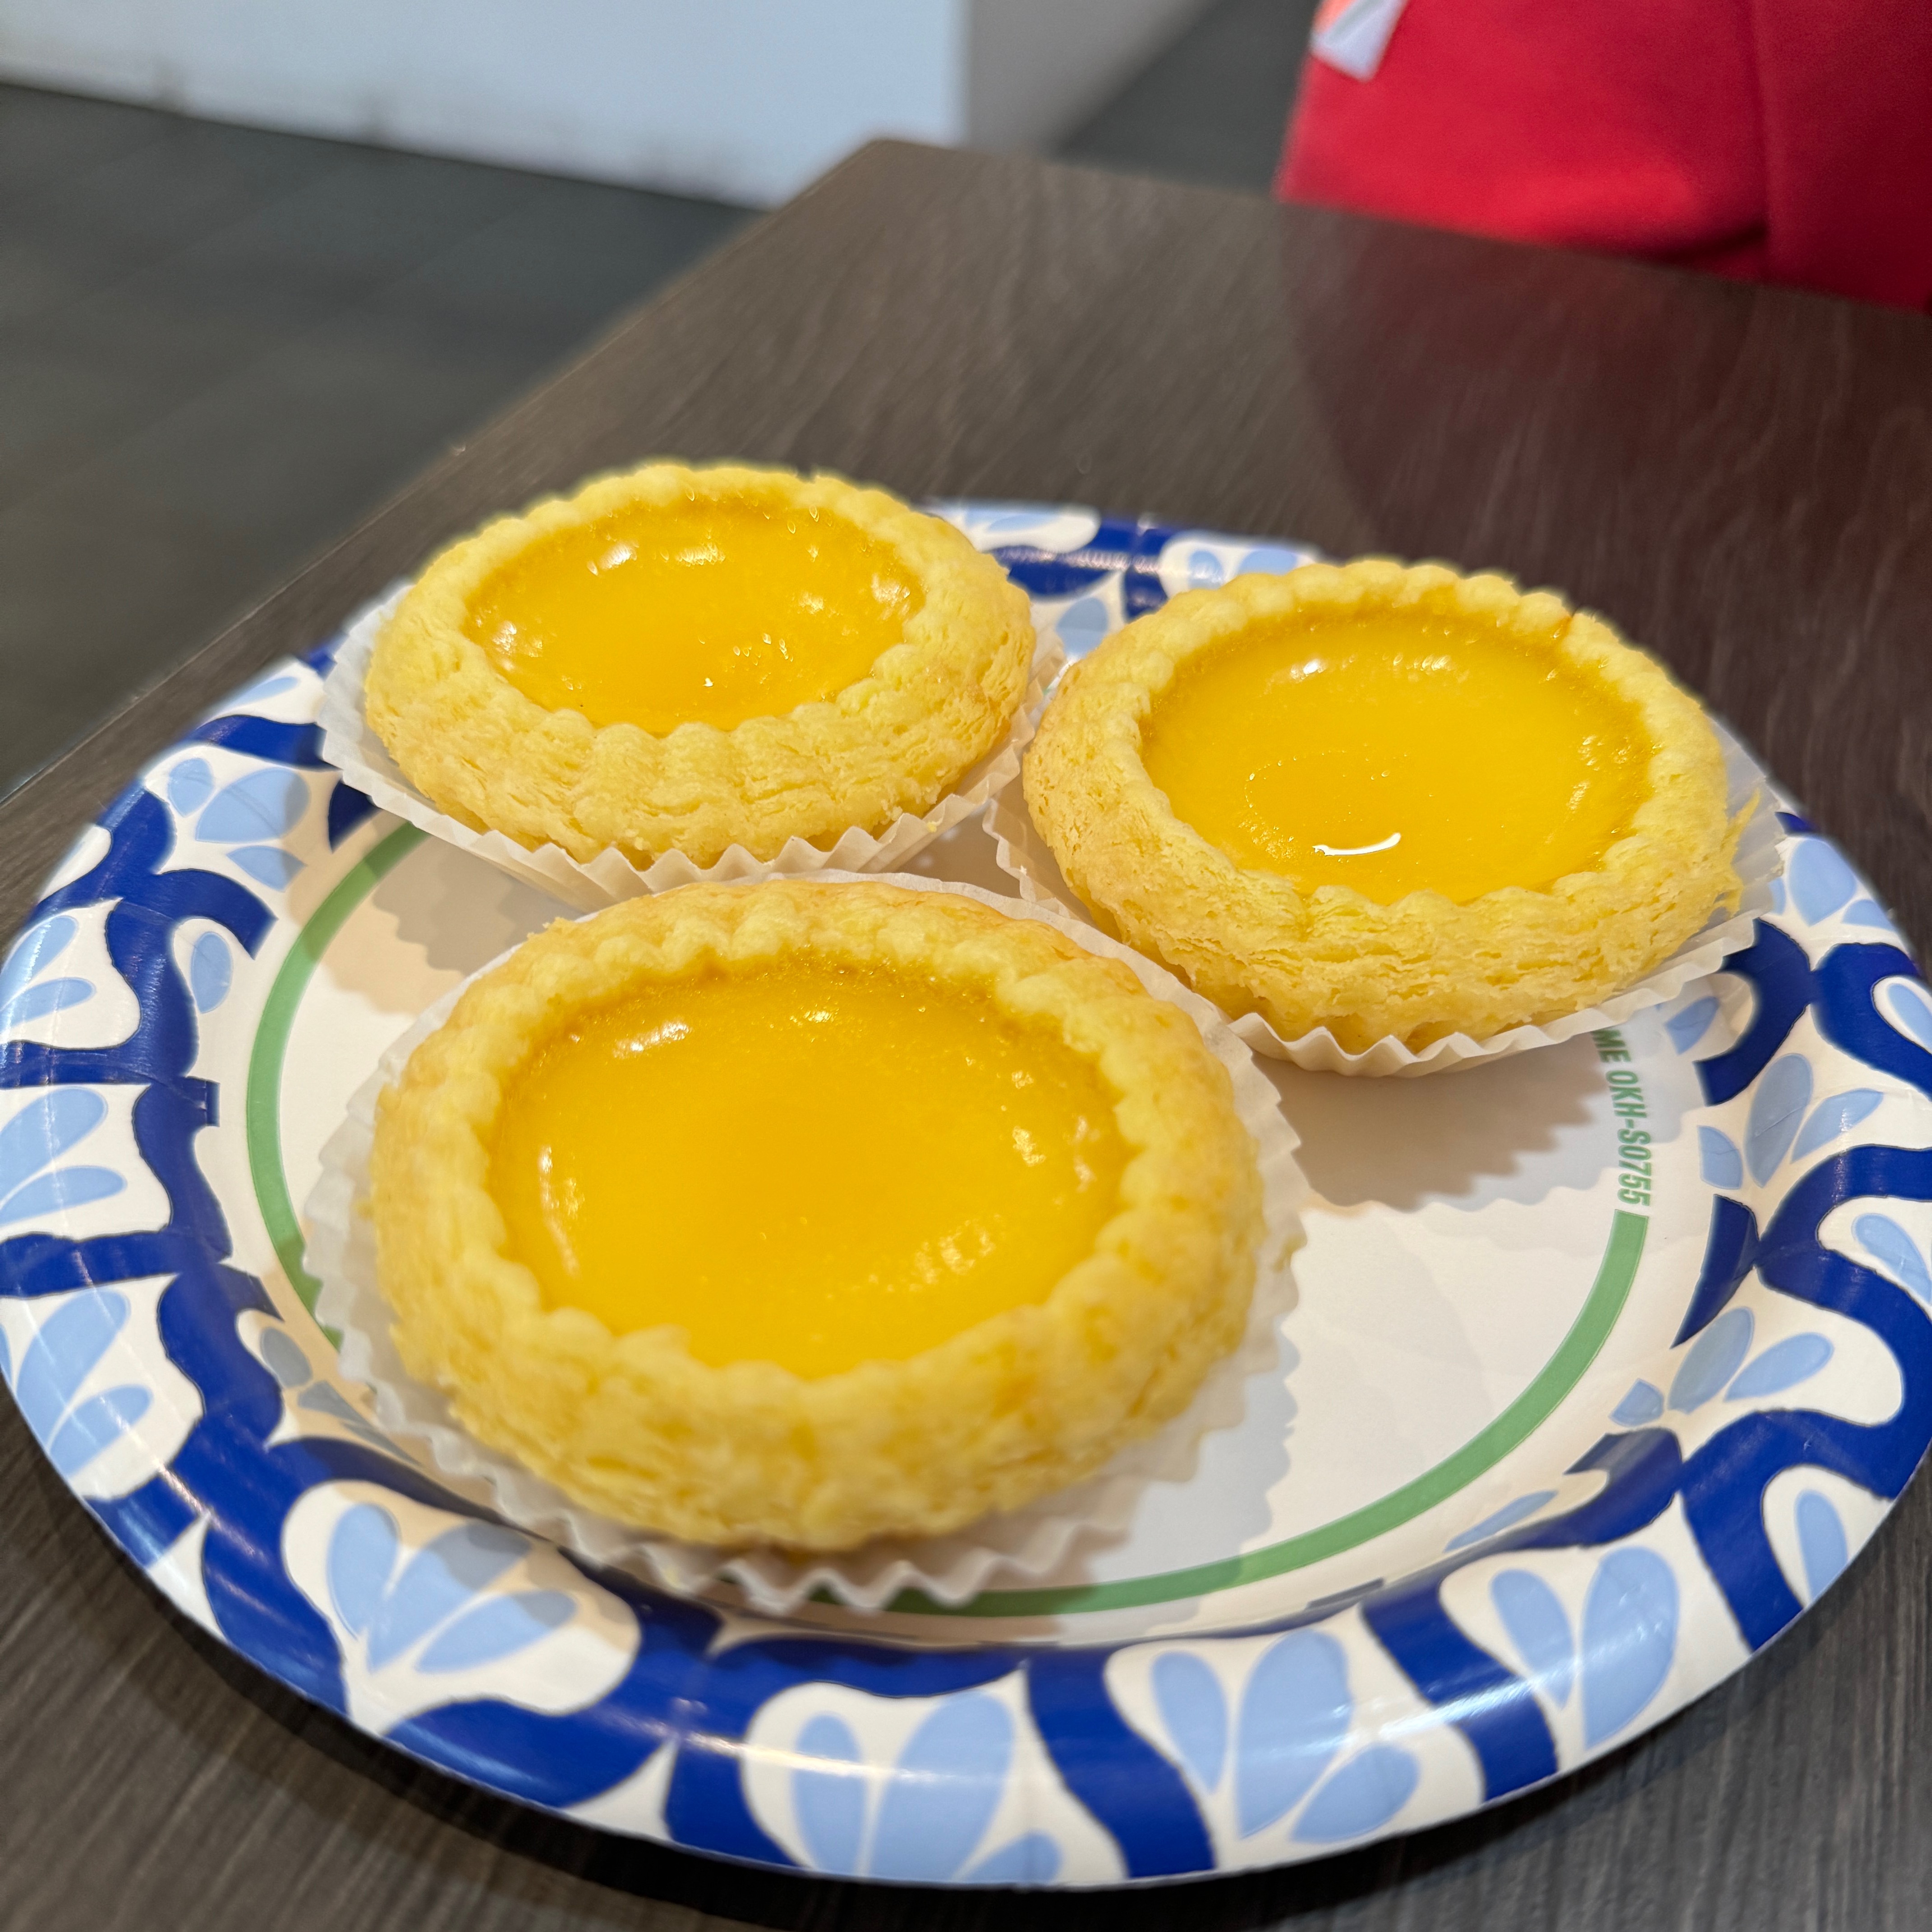 Baked Egg Tart $6.55 from Kingdom Dim Sum on #foodmento http://foodmento.com/dish/57677